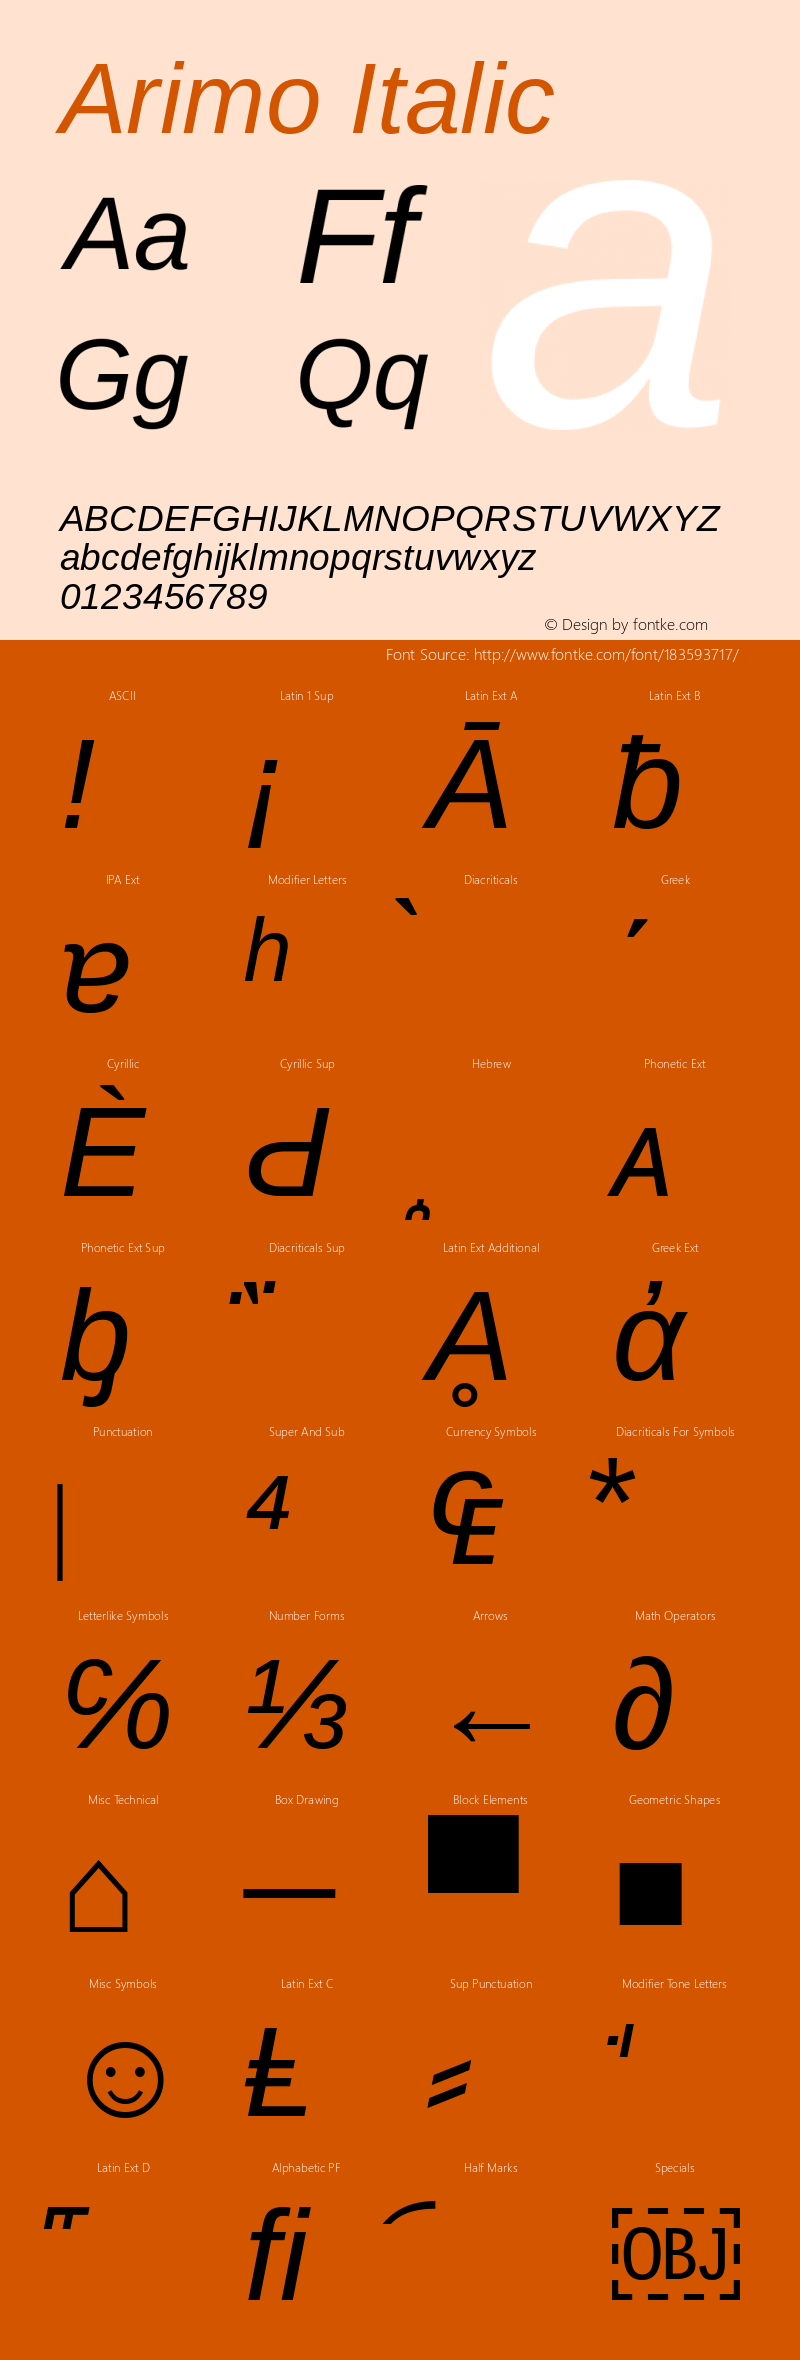 Arimo Italic Version 1.23图片样张